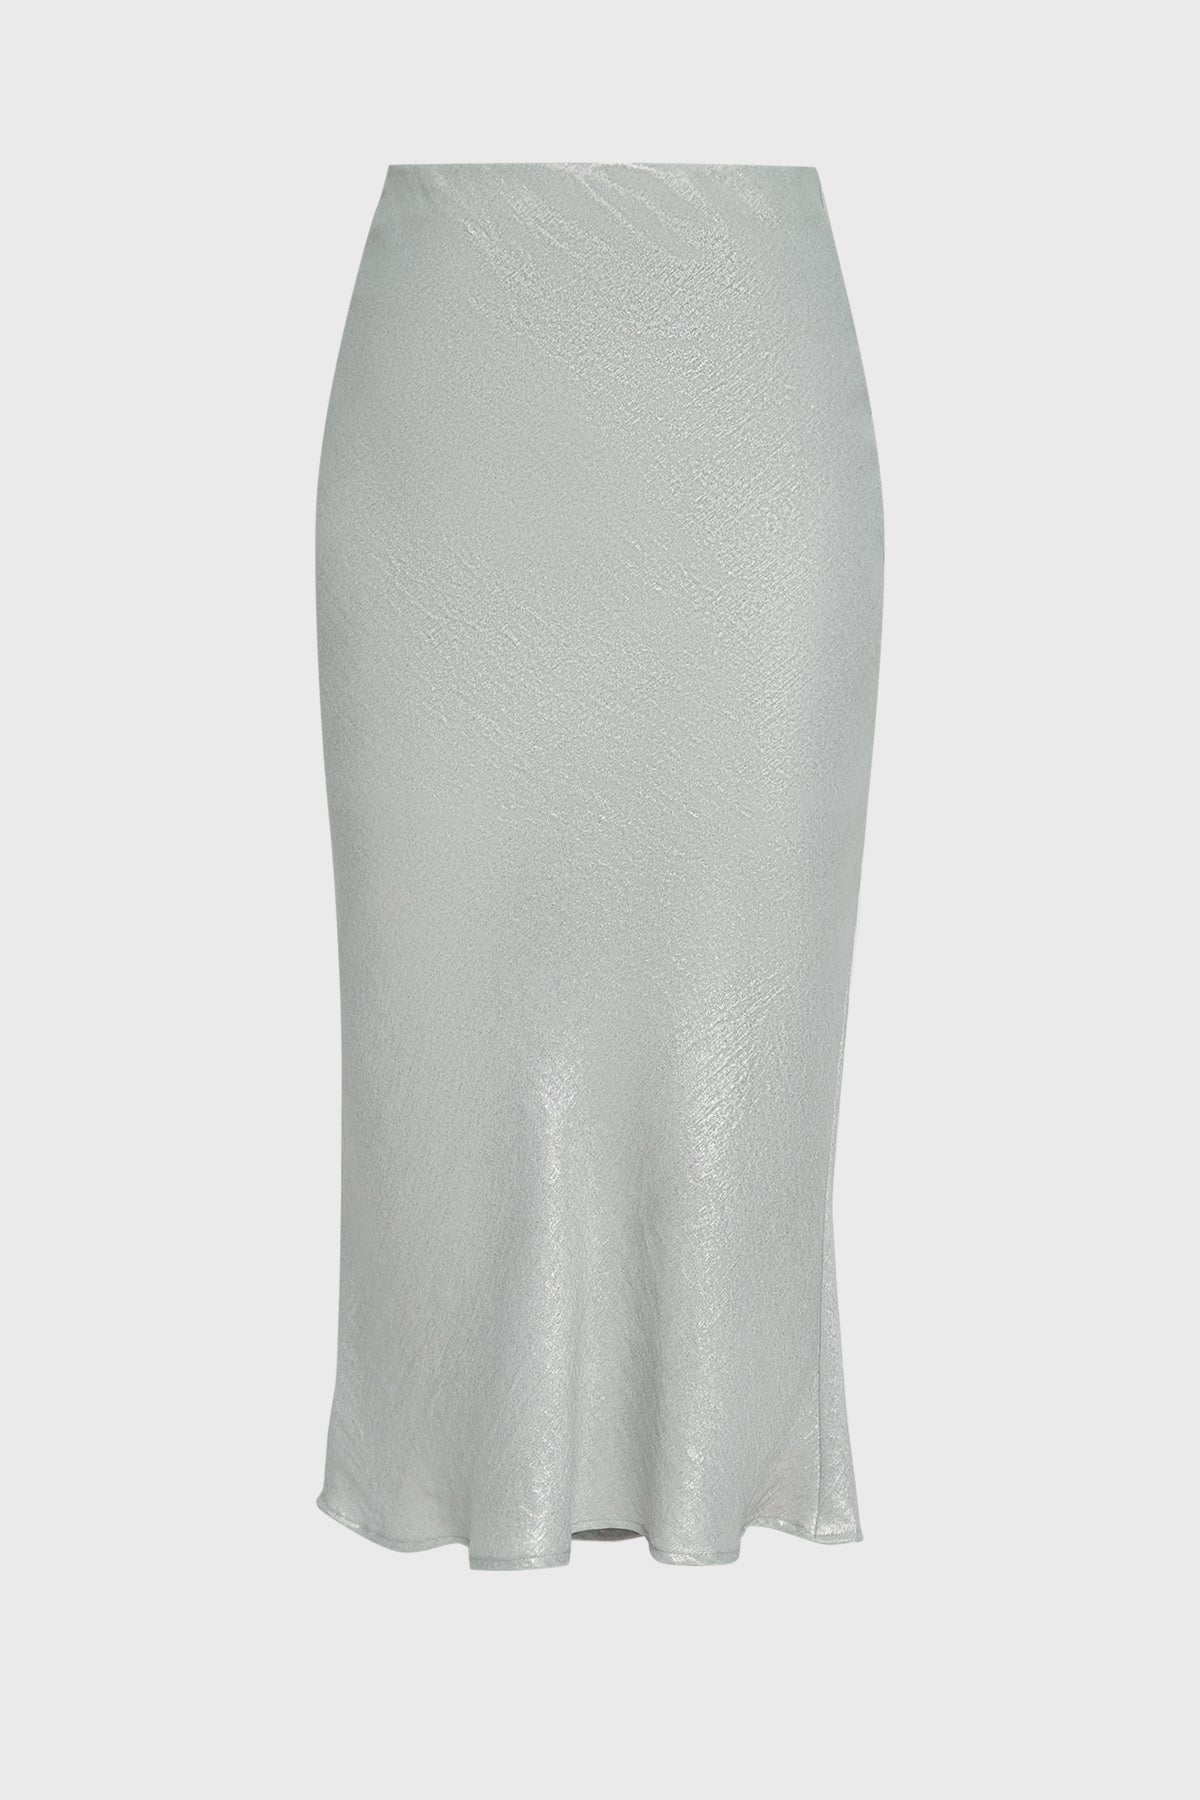 Lyon Midi Skirt in Silver Mist